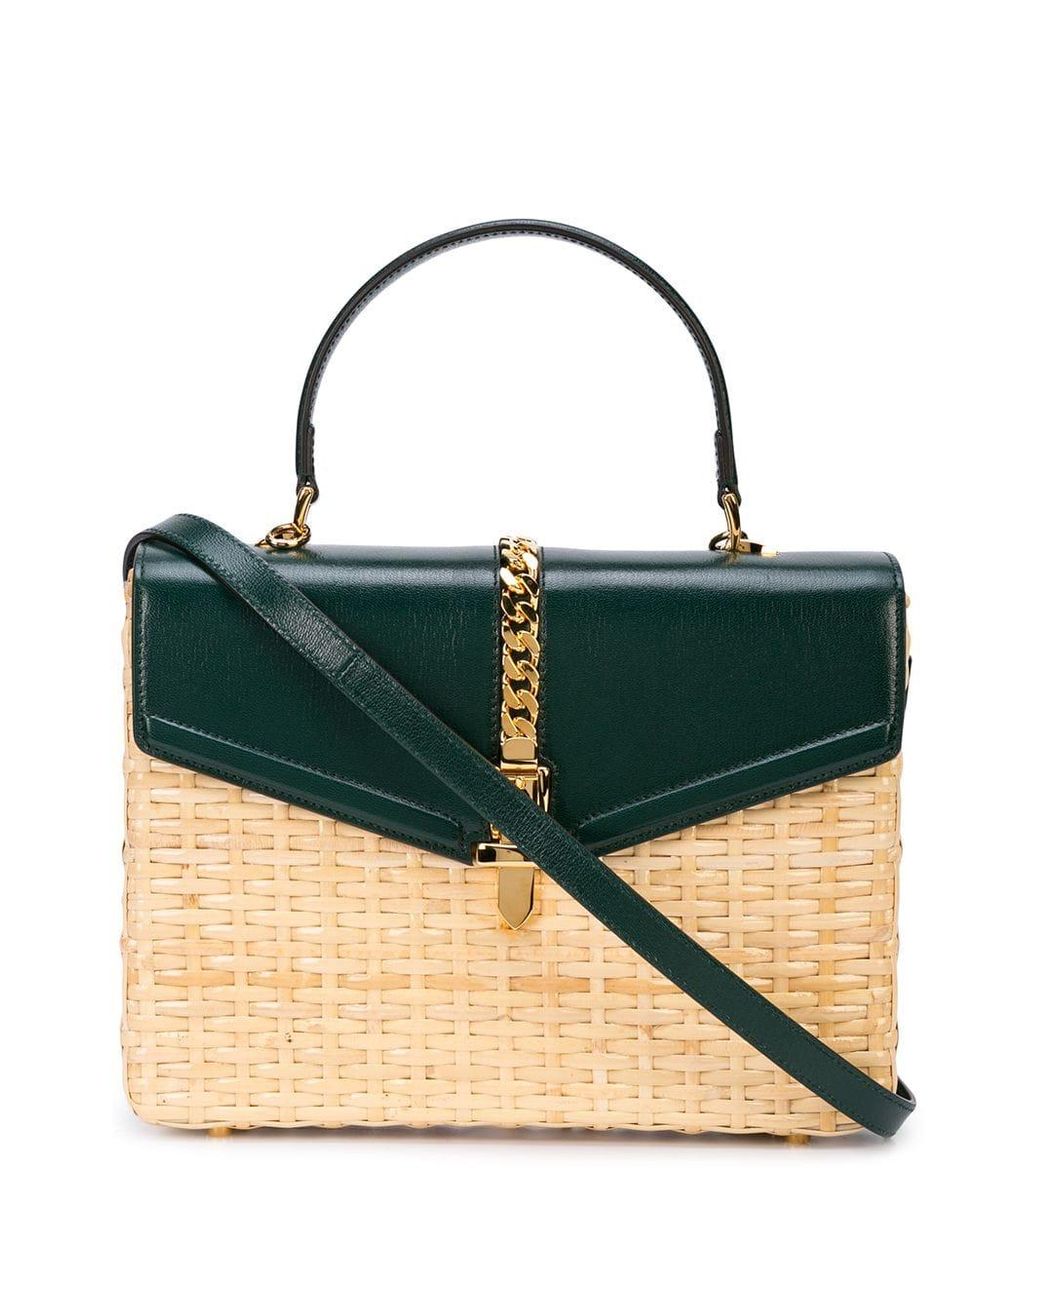 Gucci Sylvie Wicker Small Top Handle Bag in Brown | Lyst Canada